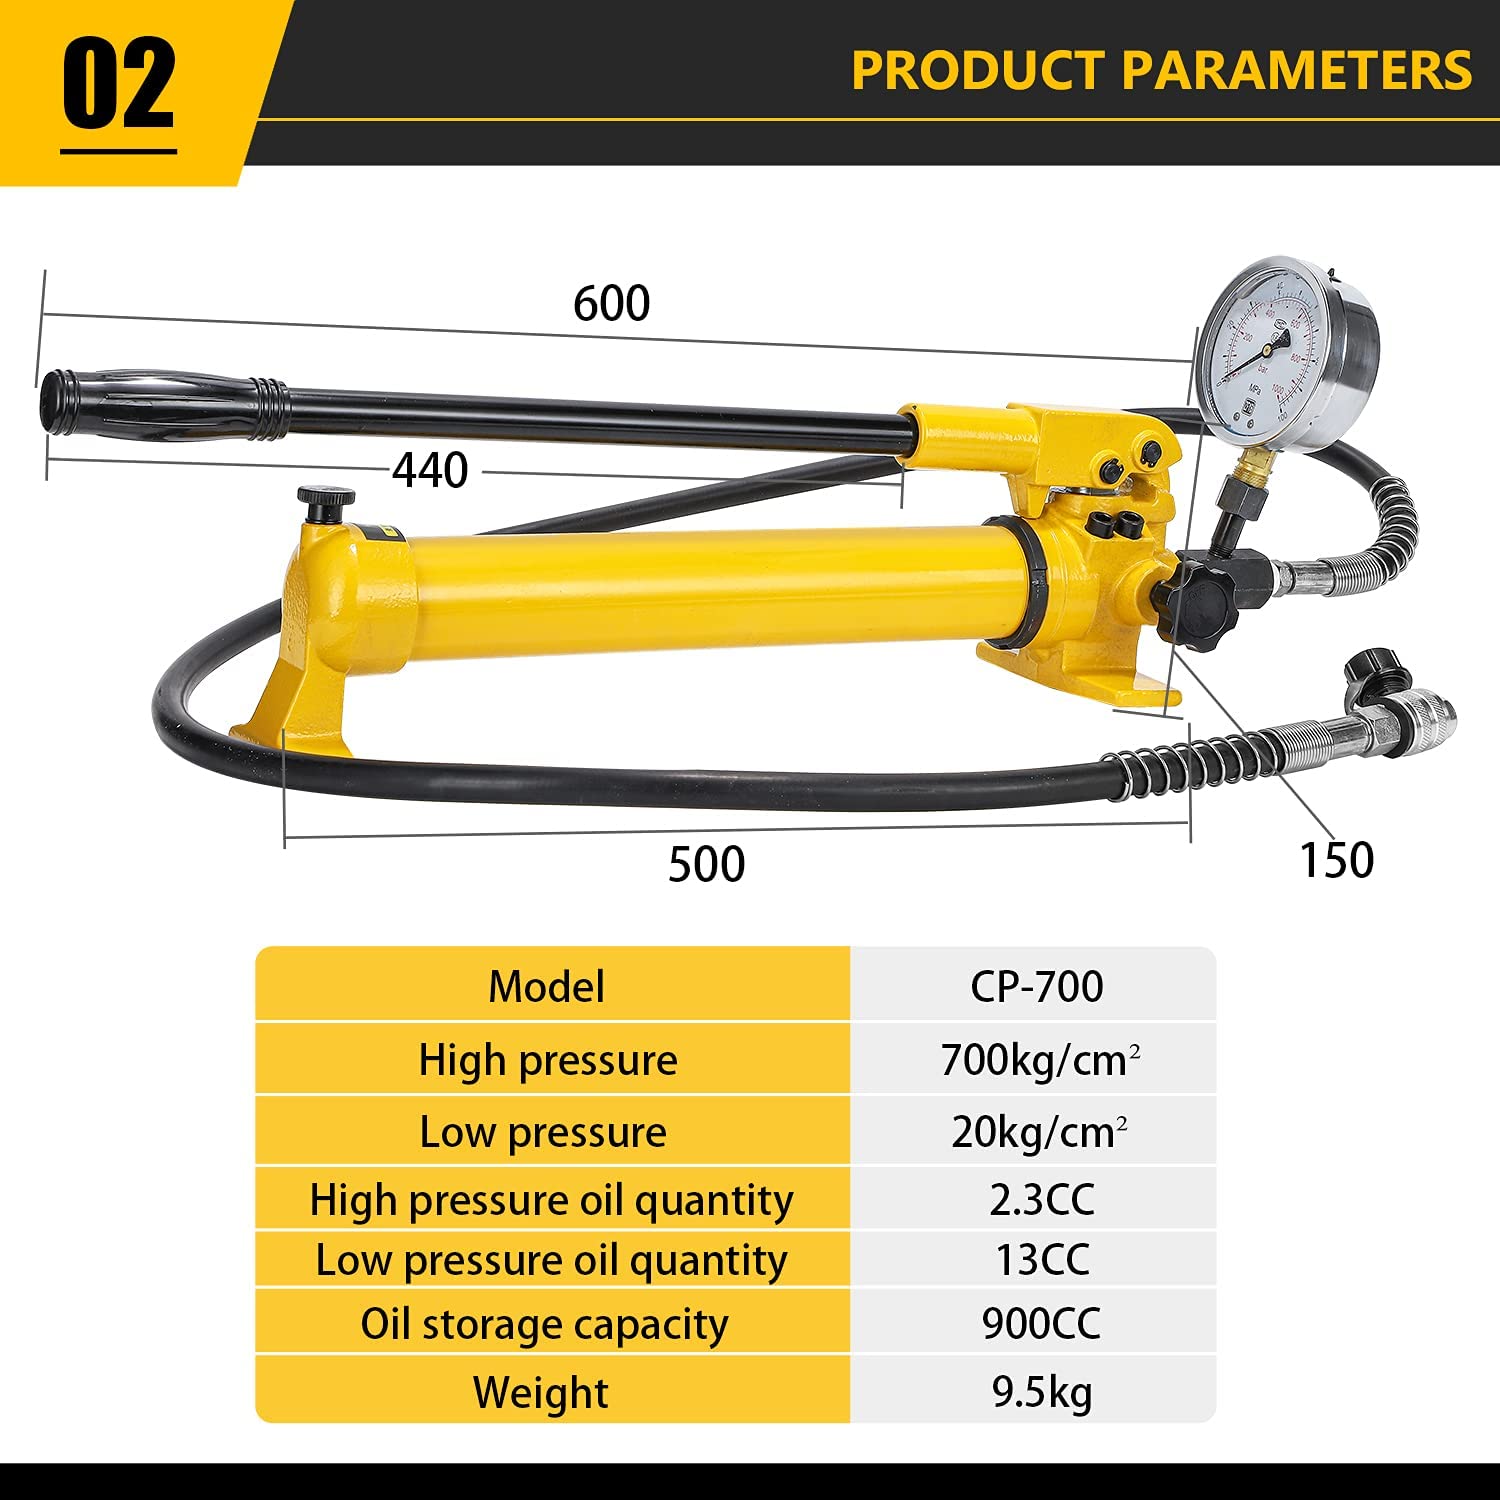 2-Speed Hydraulic Hand Pump (OB-CP700) – Techno Tools & Equipment